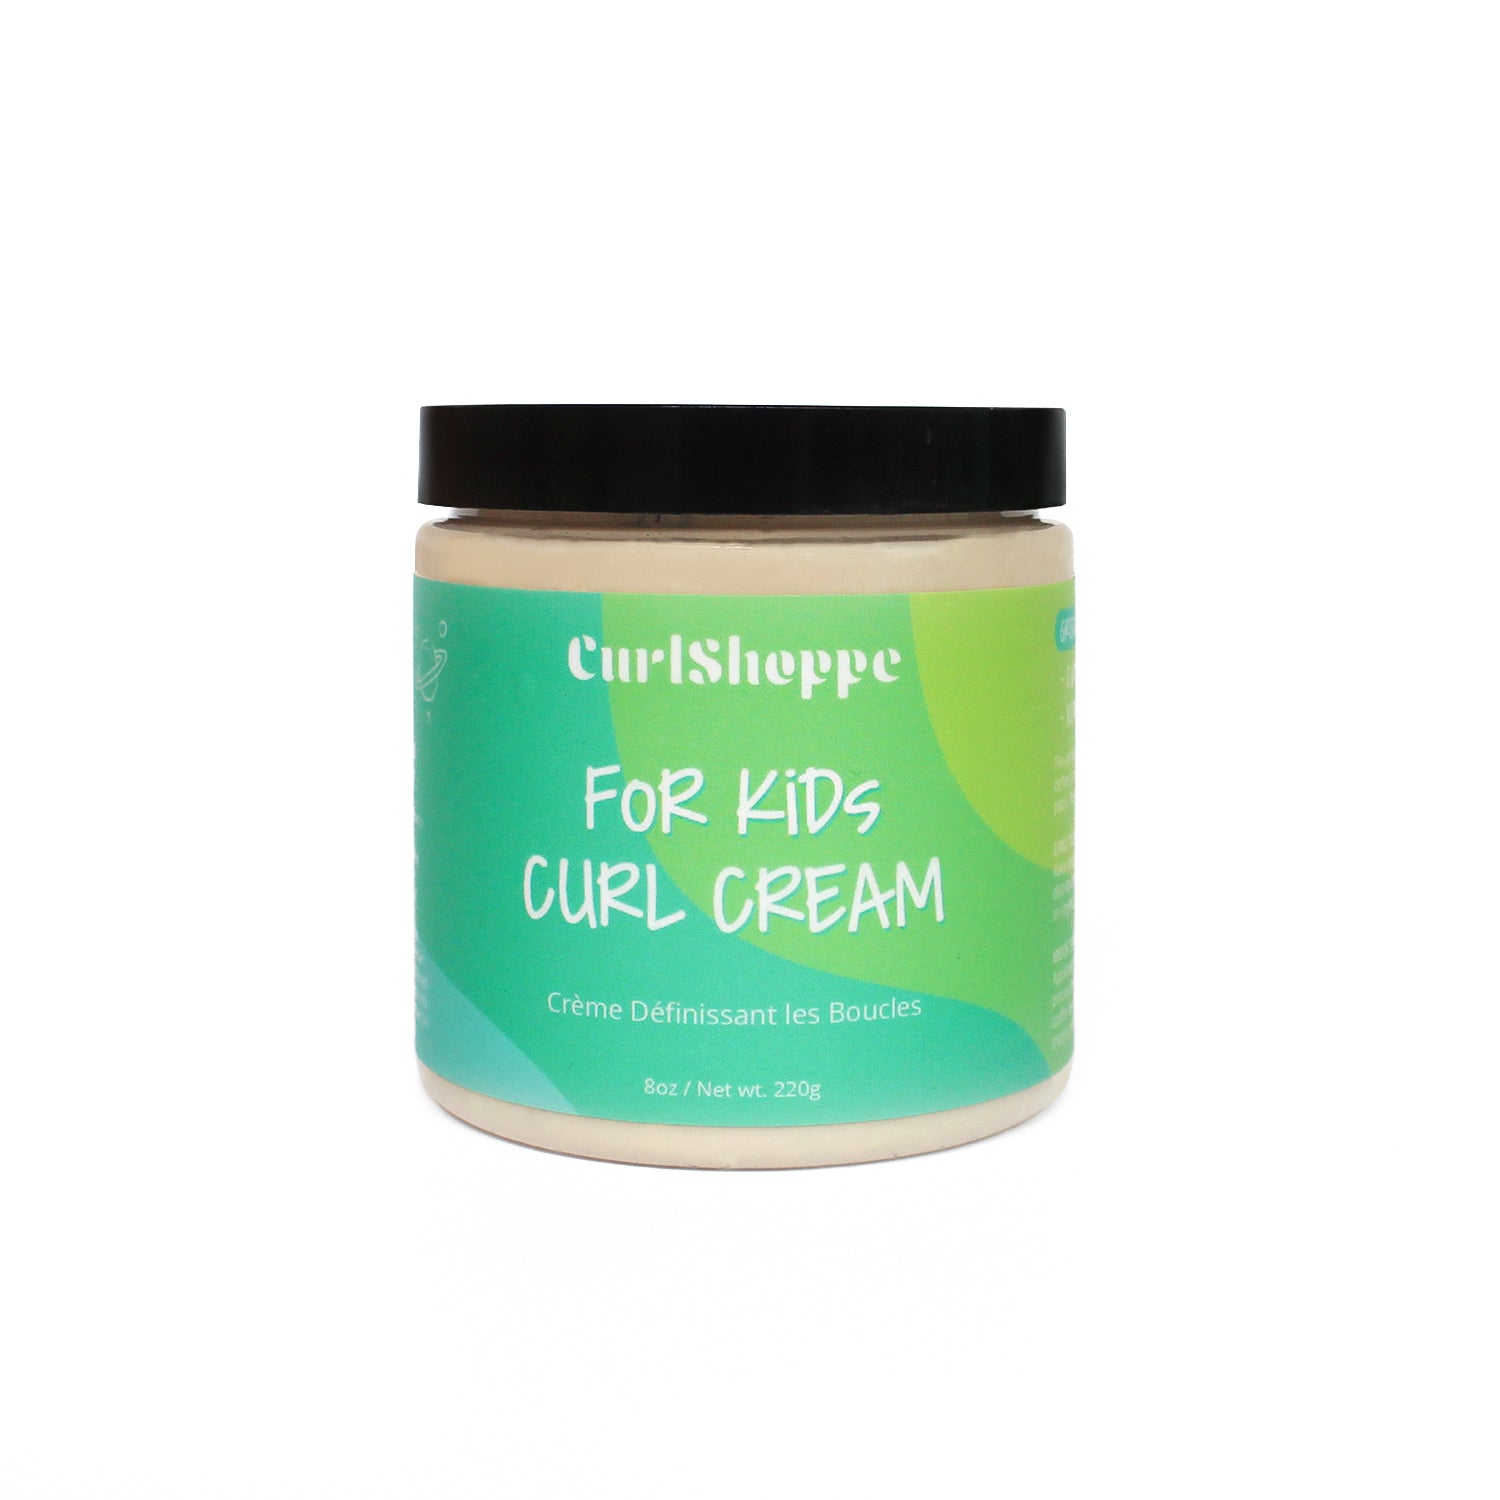 FOR KIDS Curl Cream